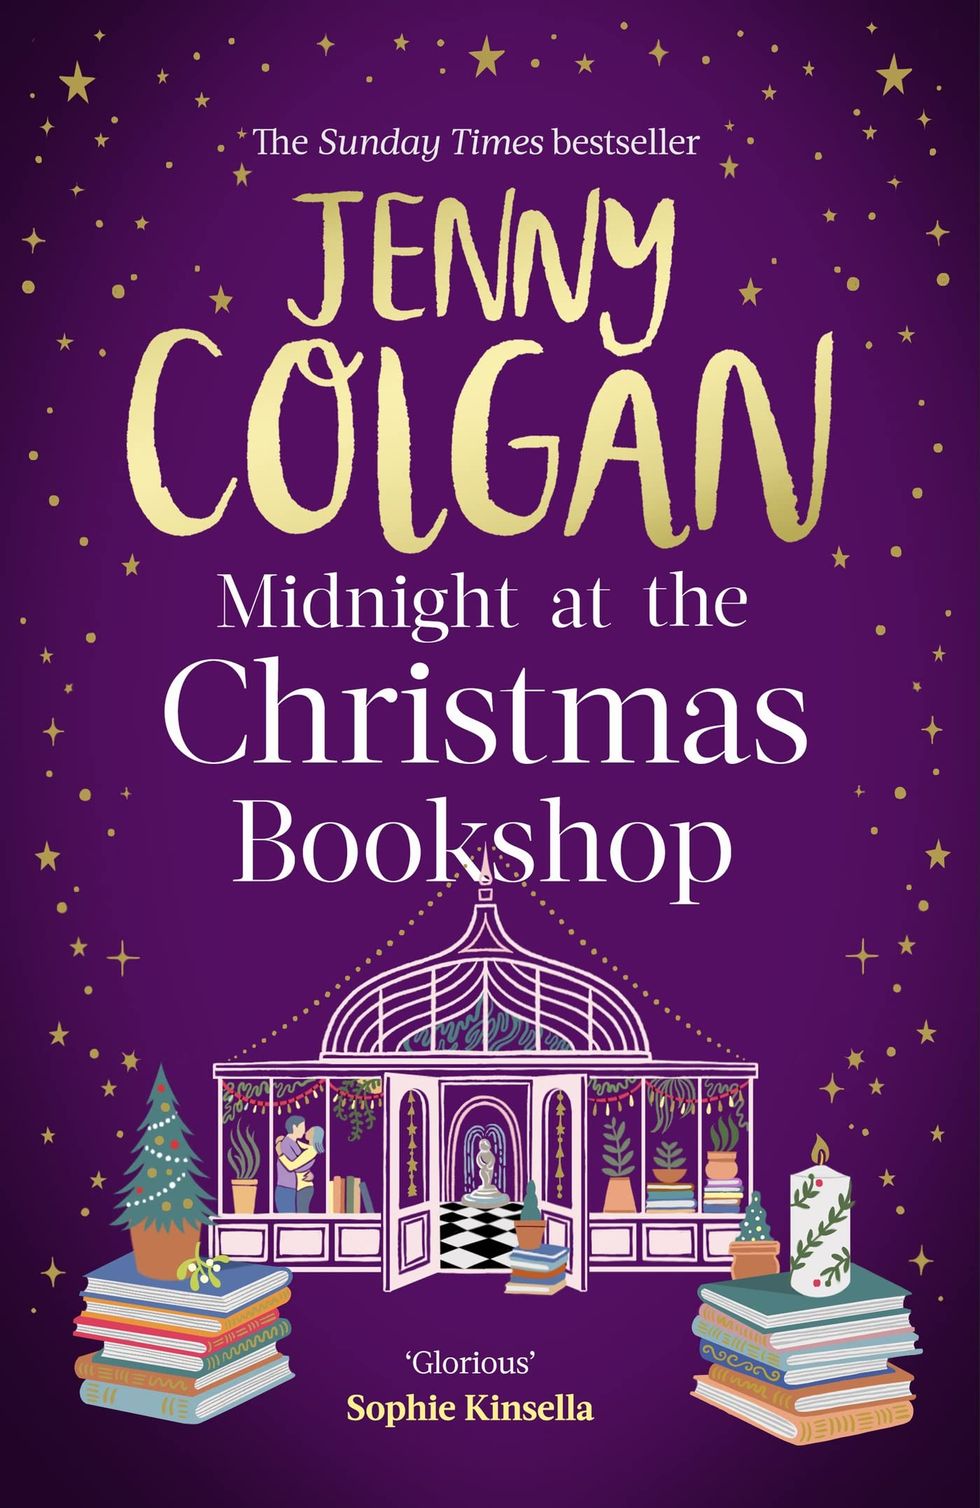 Midnight at the Christmas Bookshop by Jenny Colgan